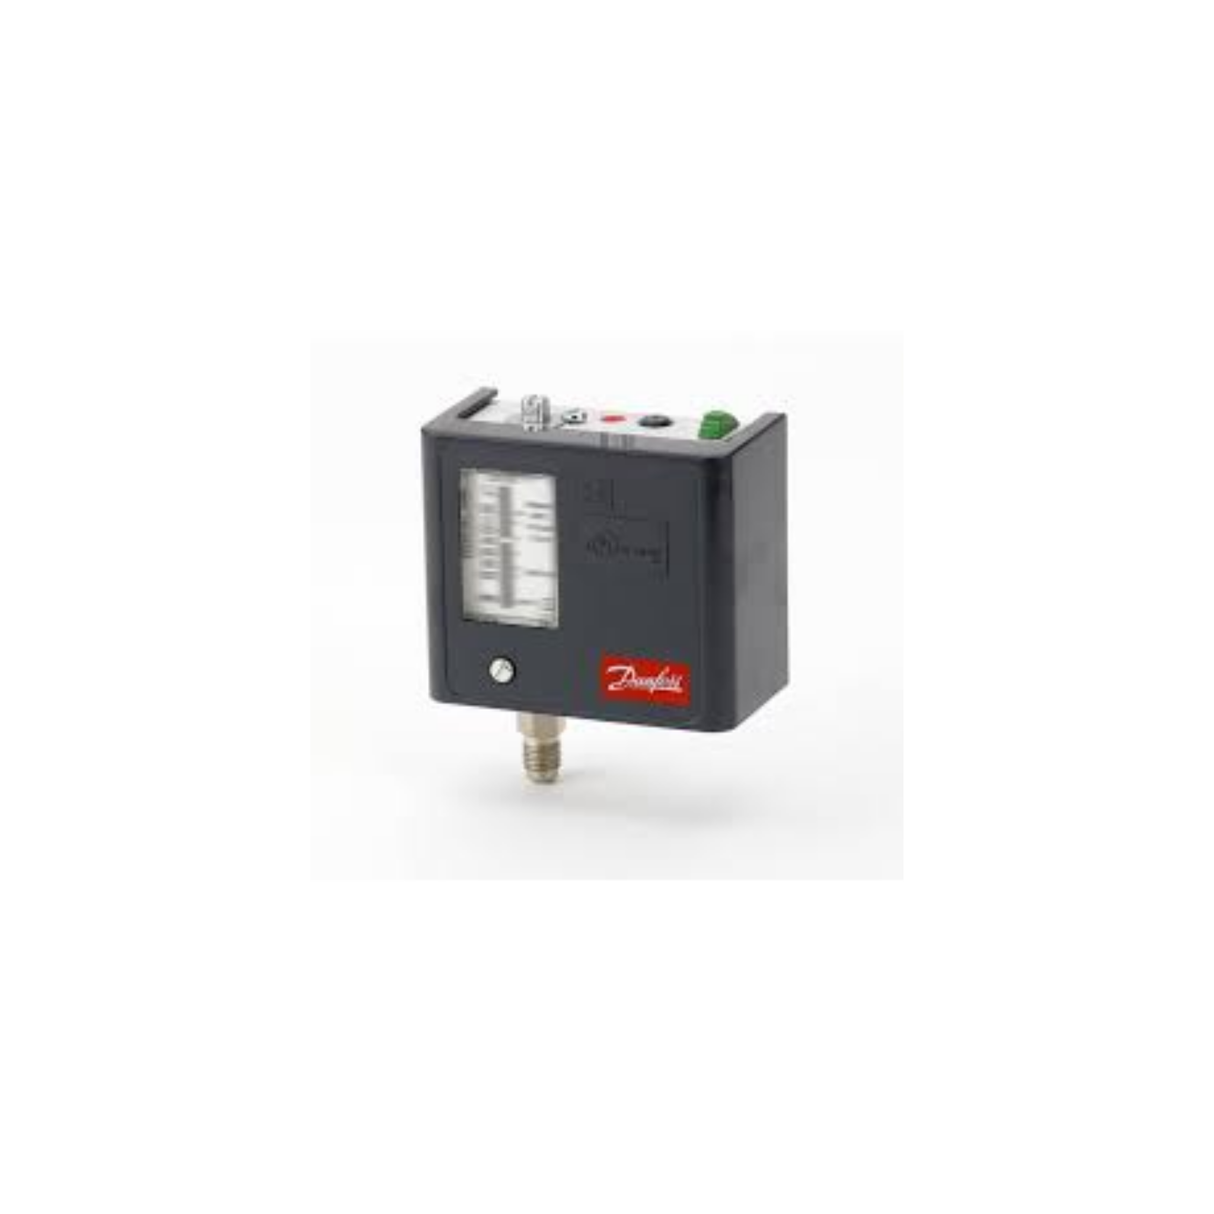 Danfoss 060-5244 Pressure Switch